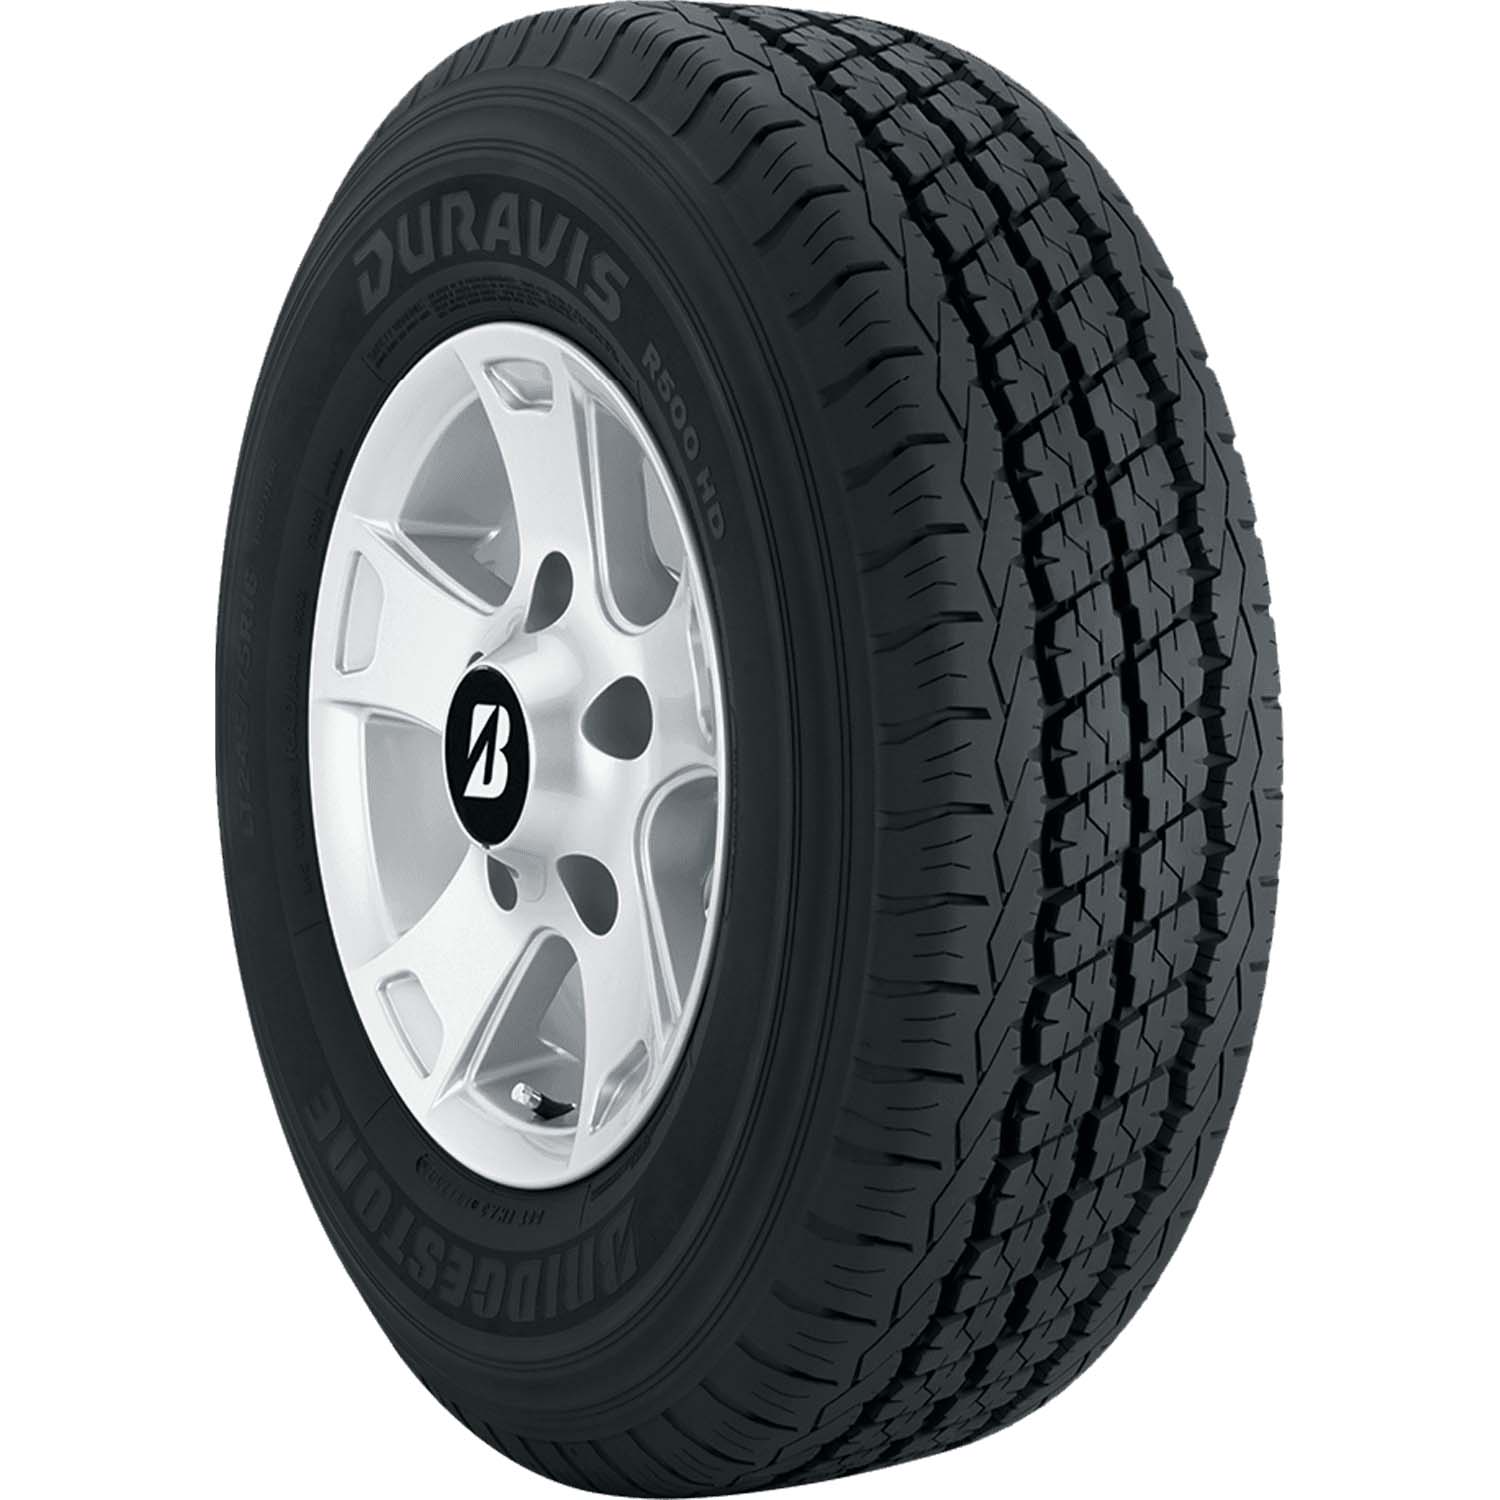 Bridgestone Duravis R500 HD All Season LT265/70R17 121/118R E Light Truck Tire - image 5 of 7